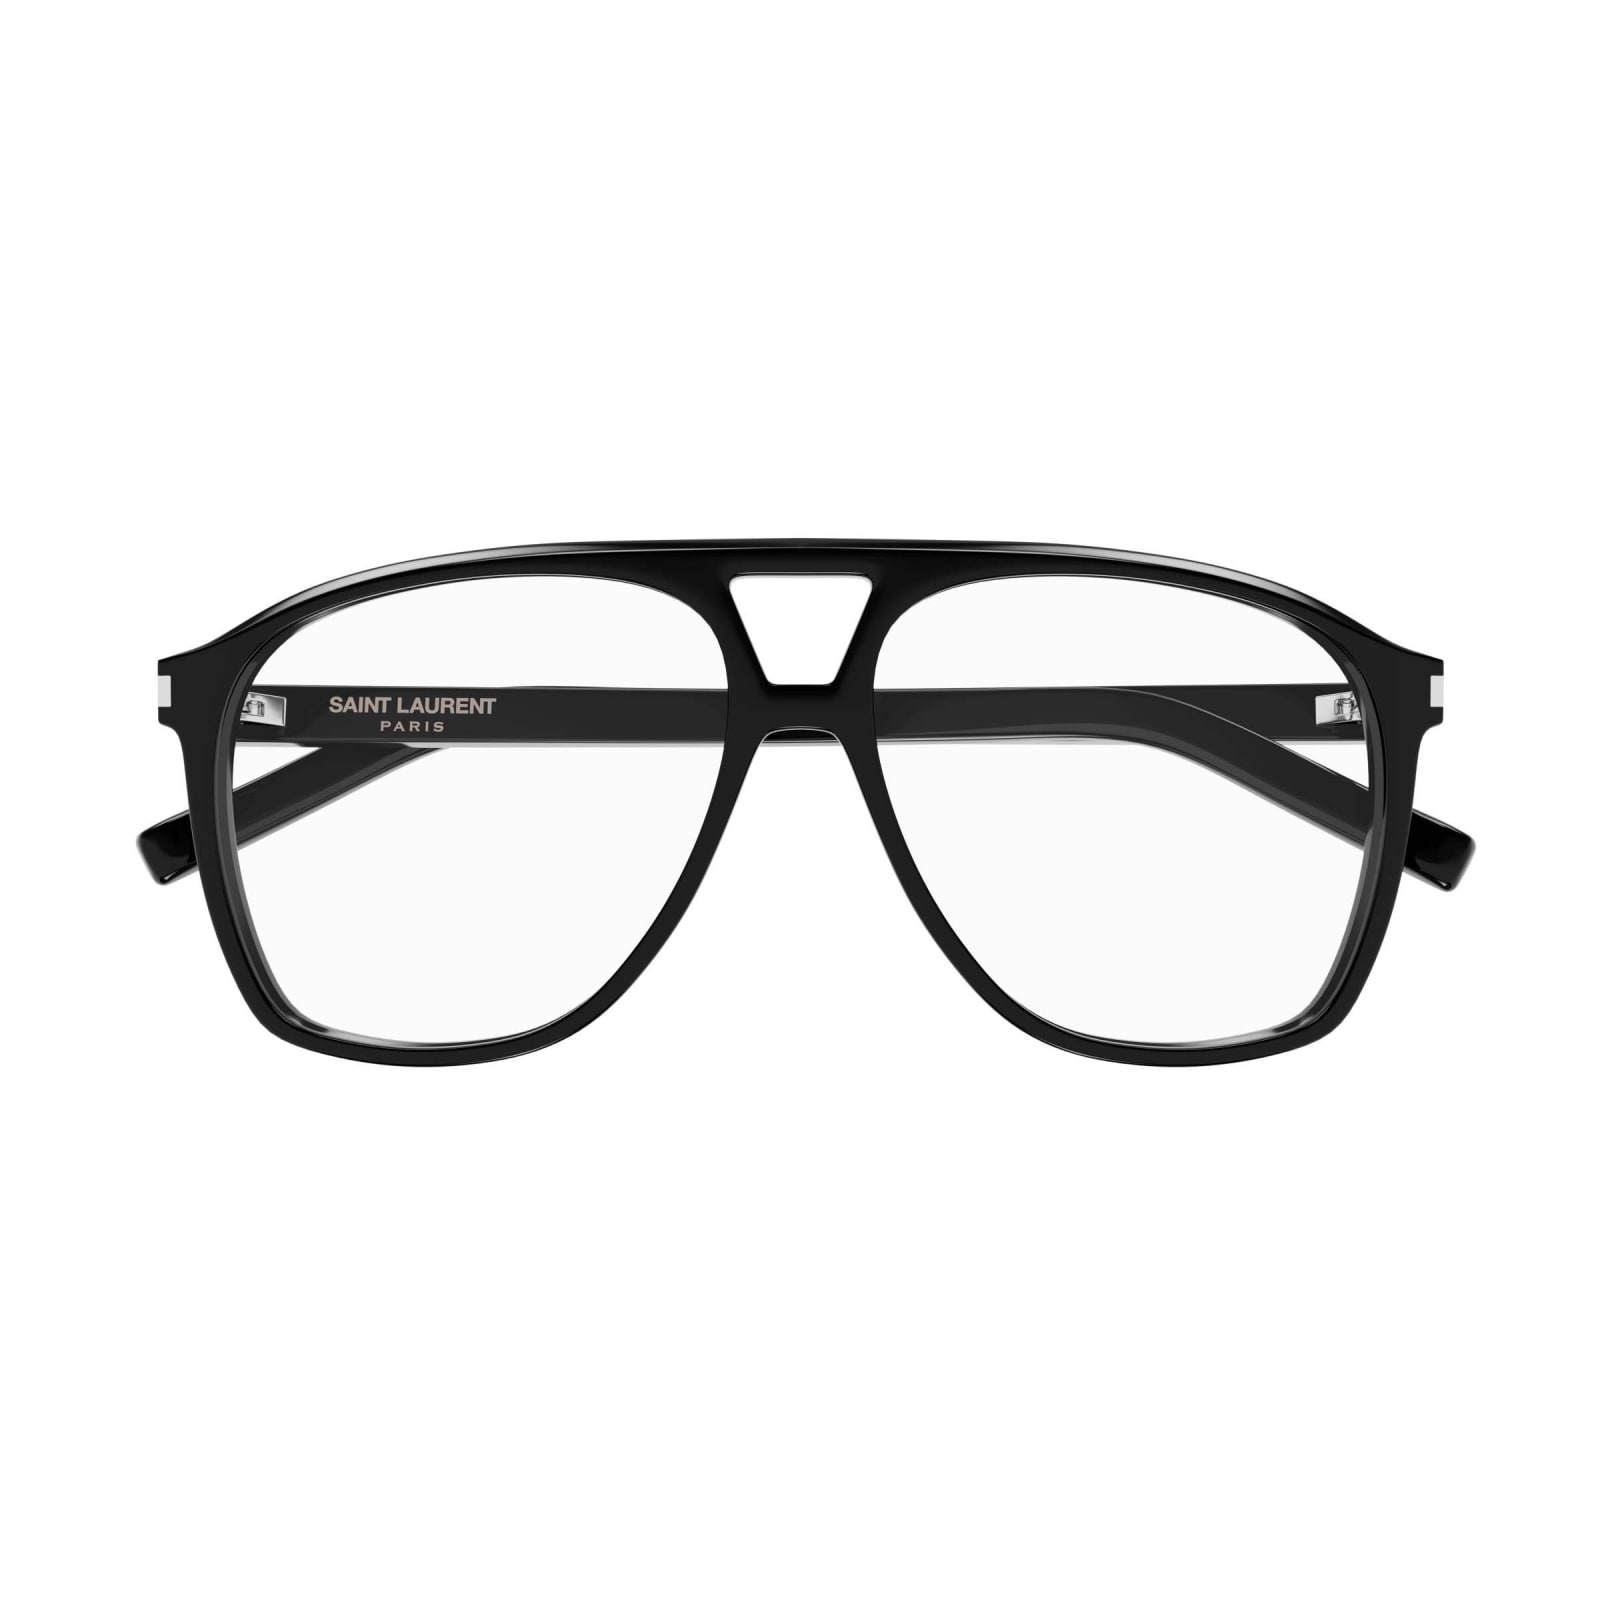 Saint Laurent Eyewear Glasses